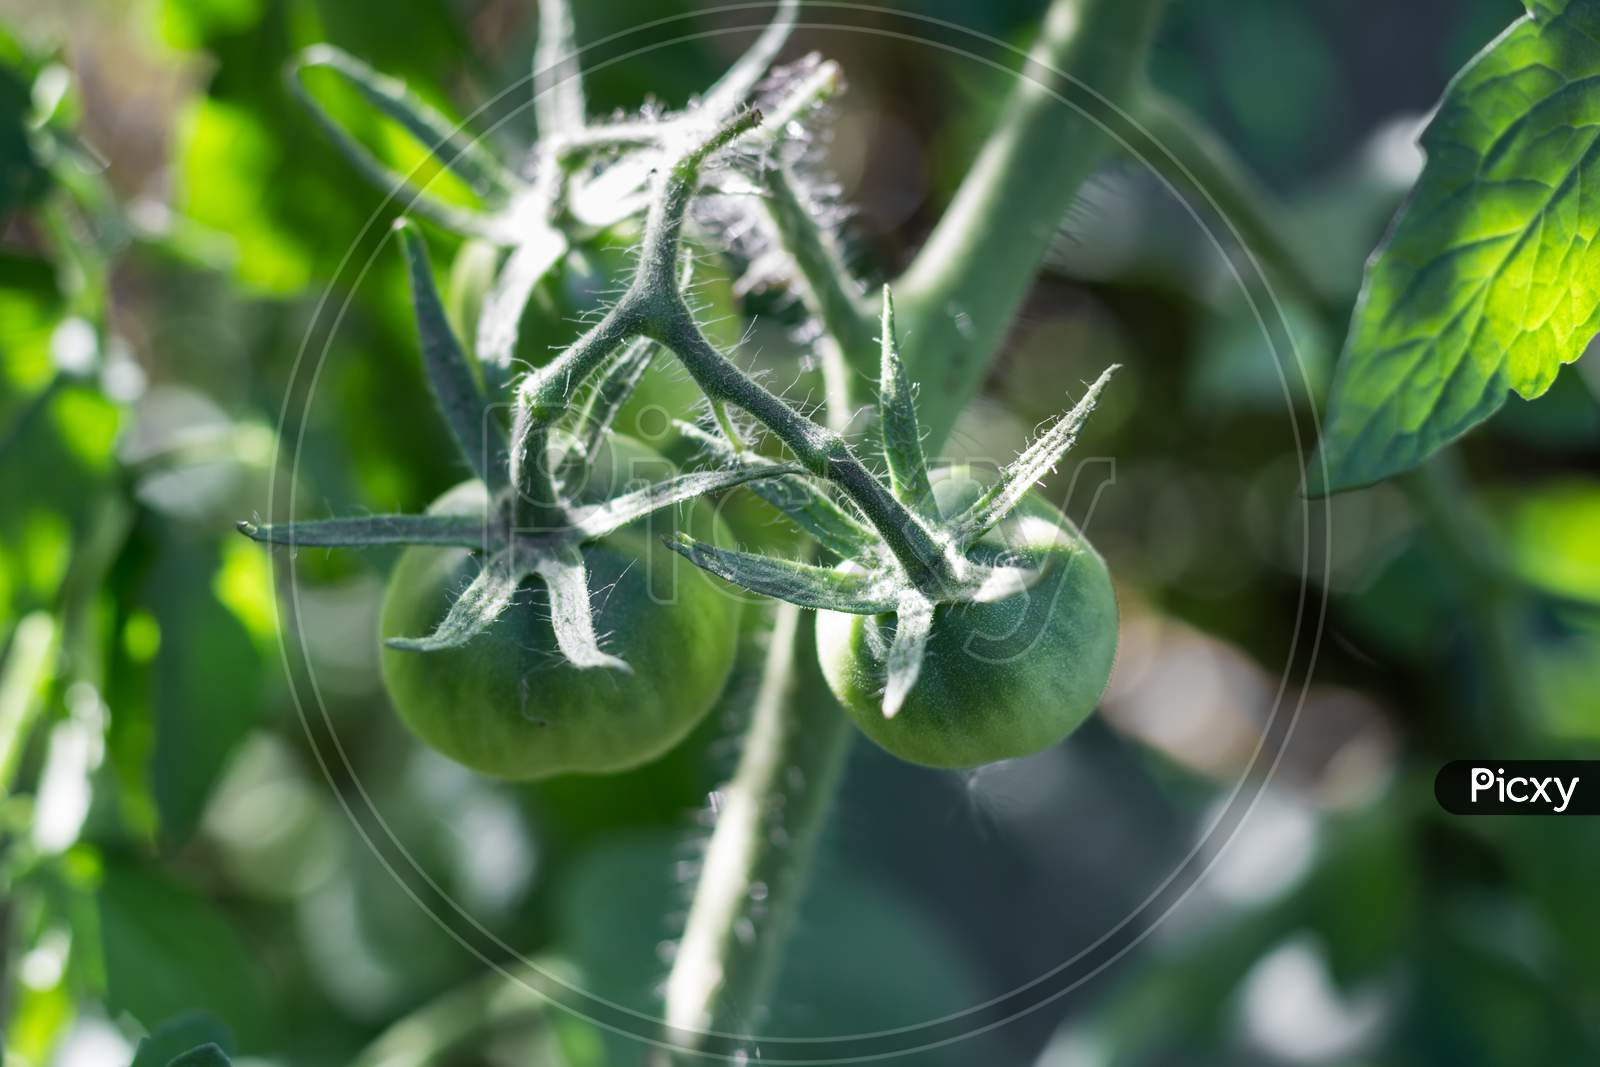 Unripe Green Tomatoes On Organic Garden Plant